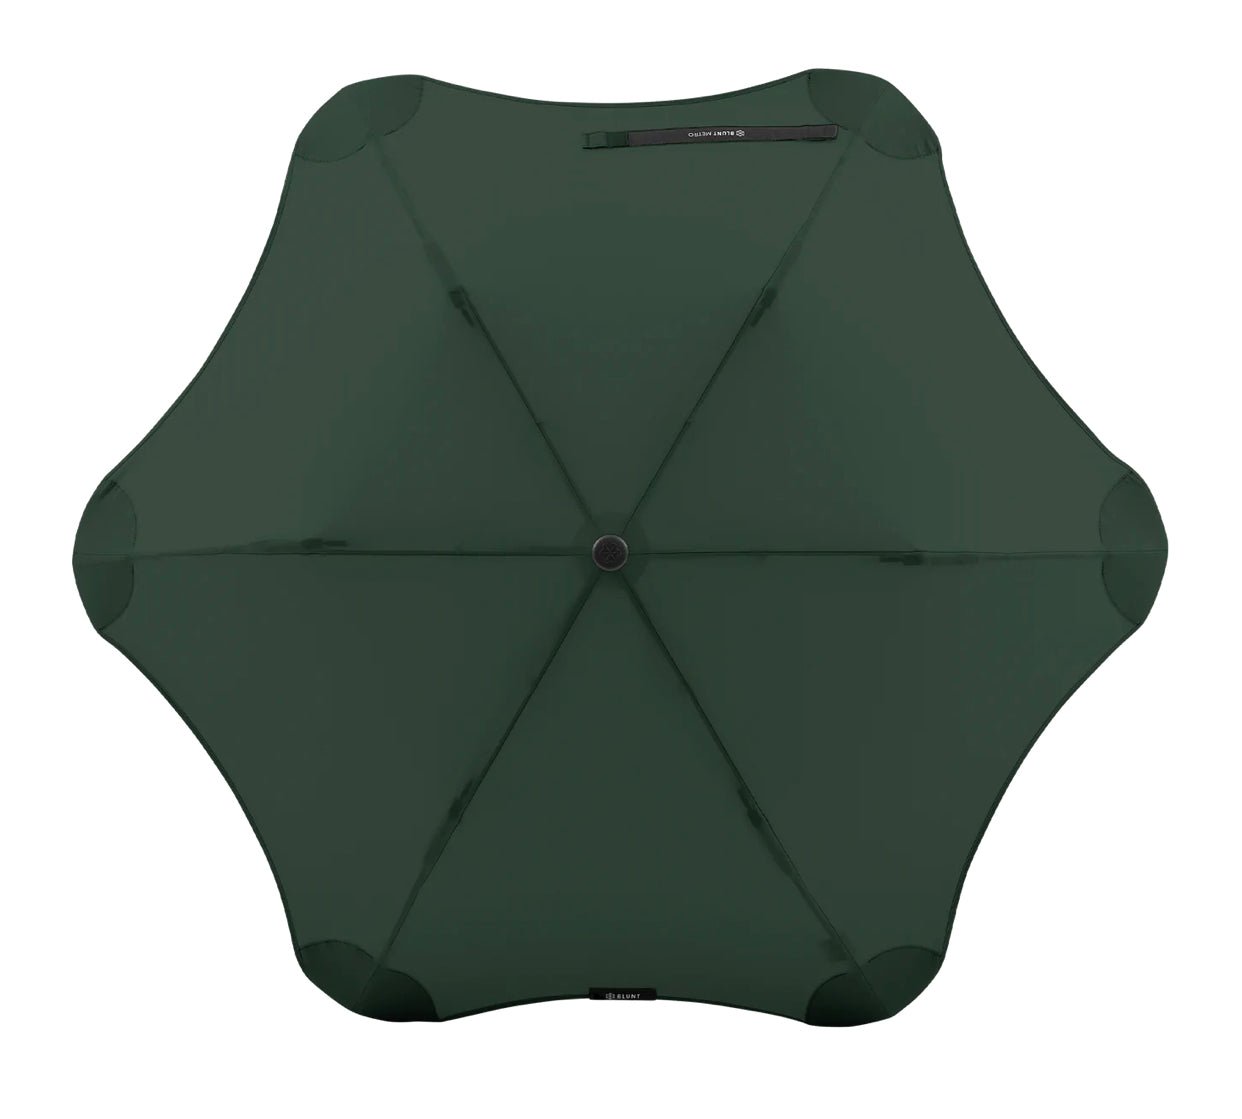 Blunt Metro Umbrella - Green - The Flower Crate